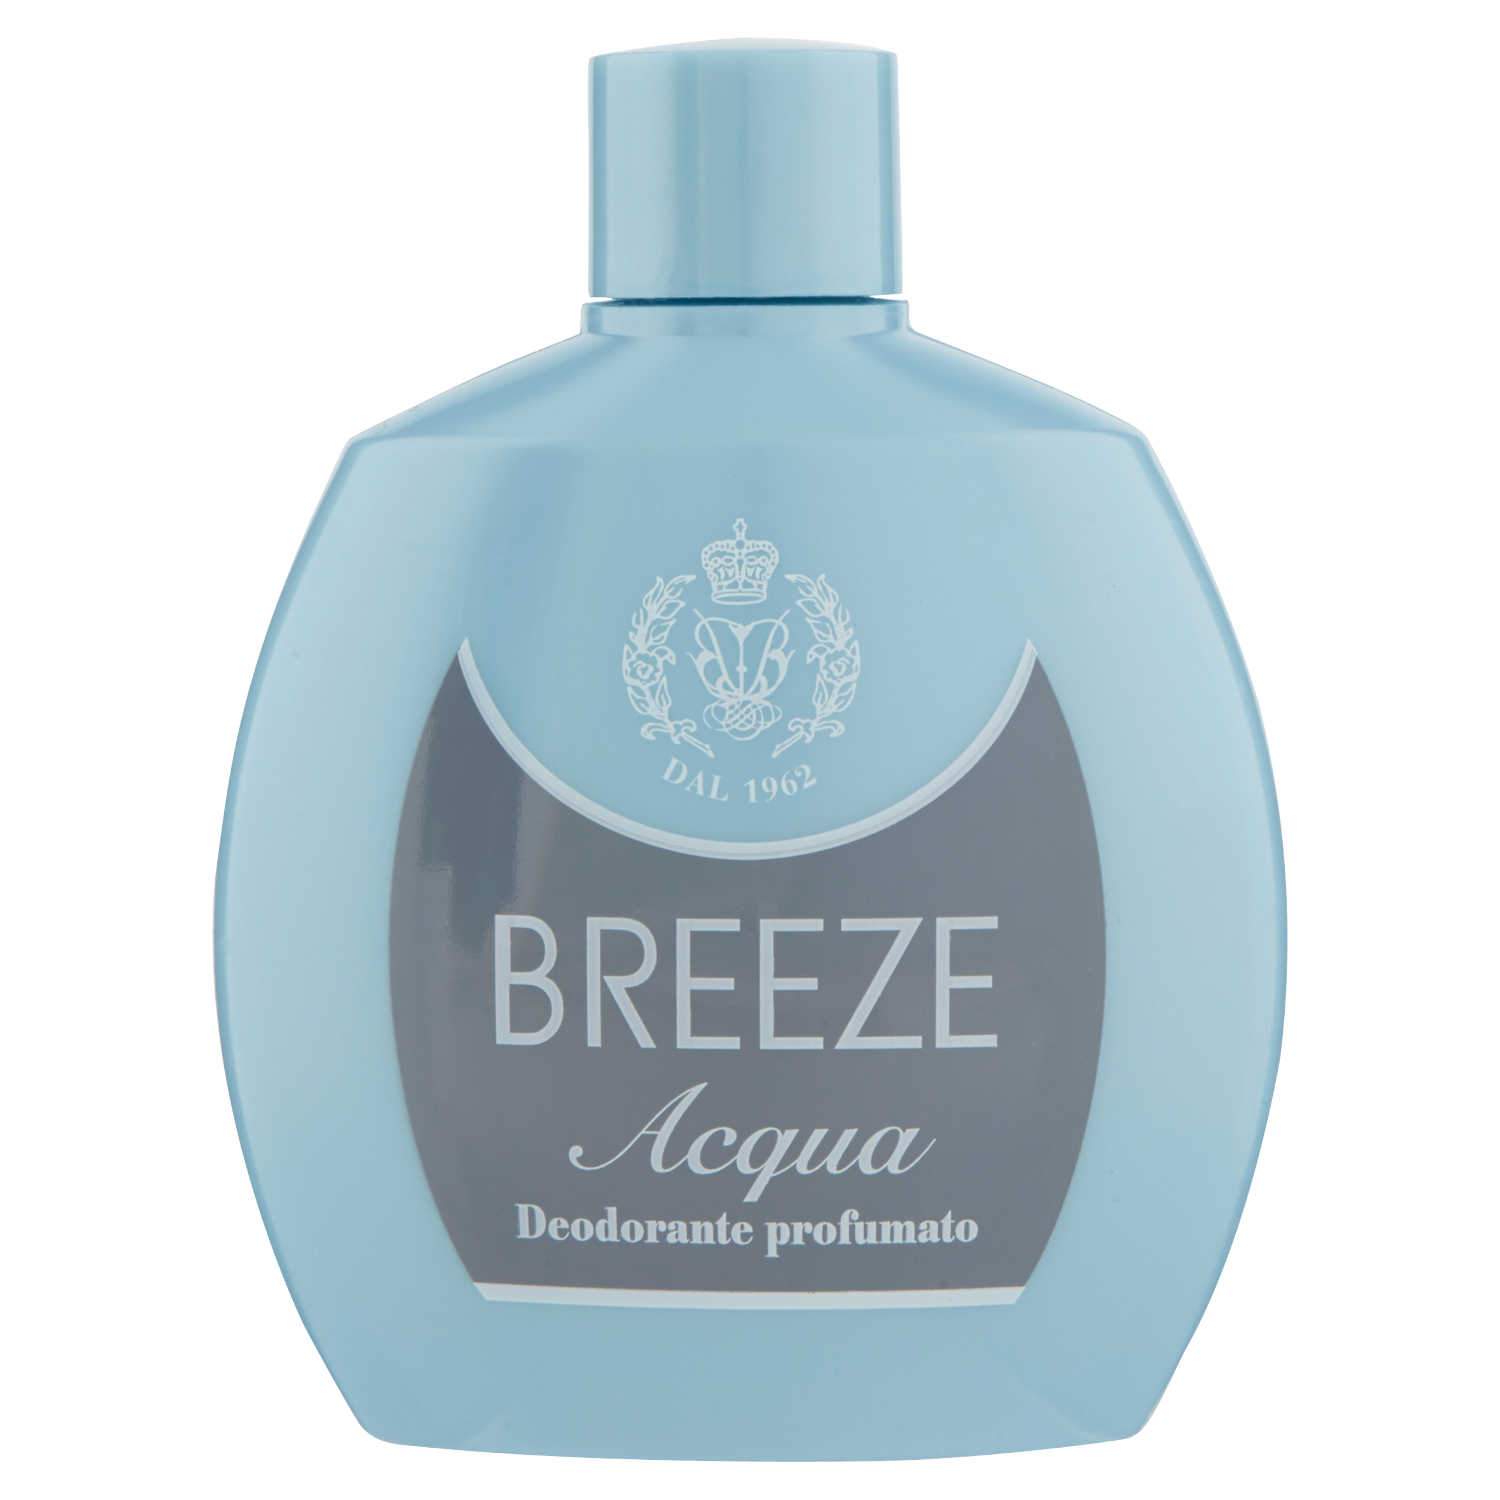 Breeze Acqua Deodorante profumato 100ml